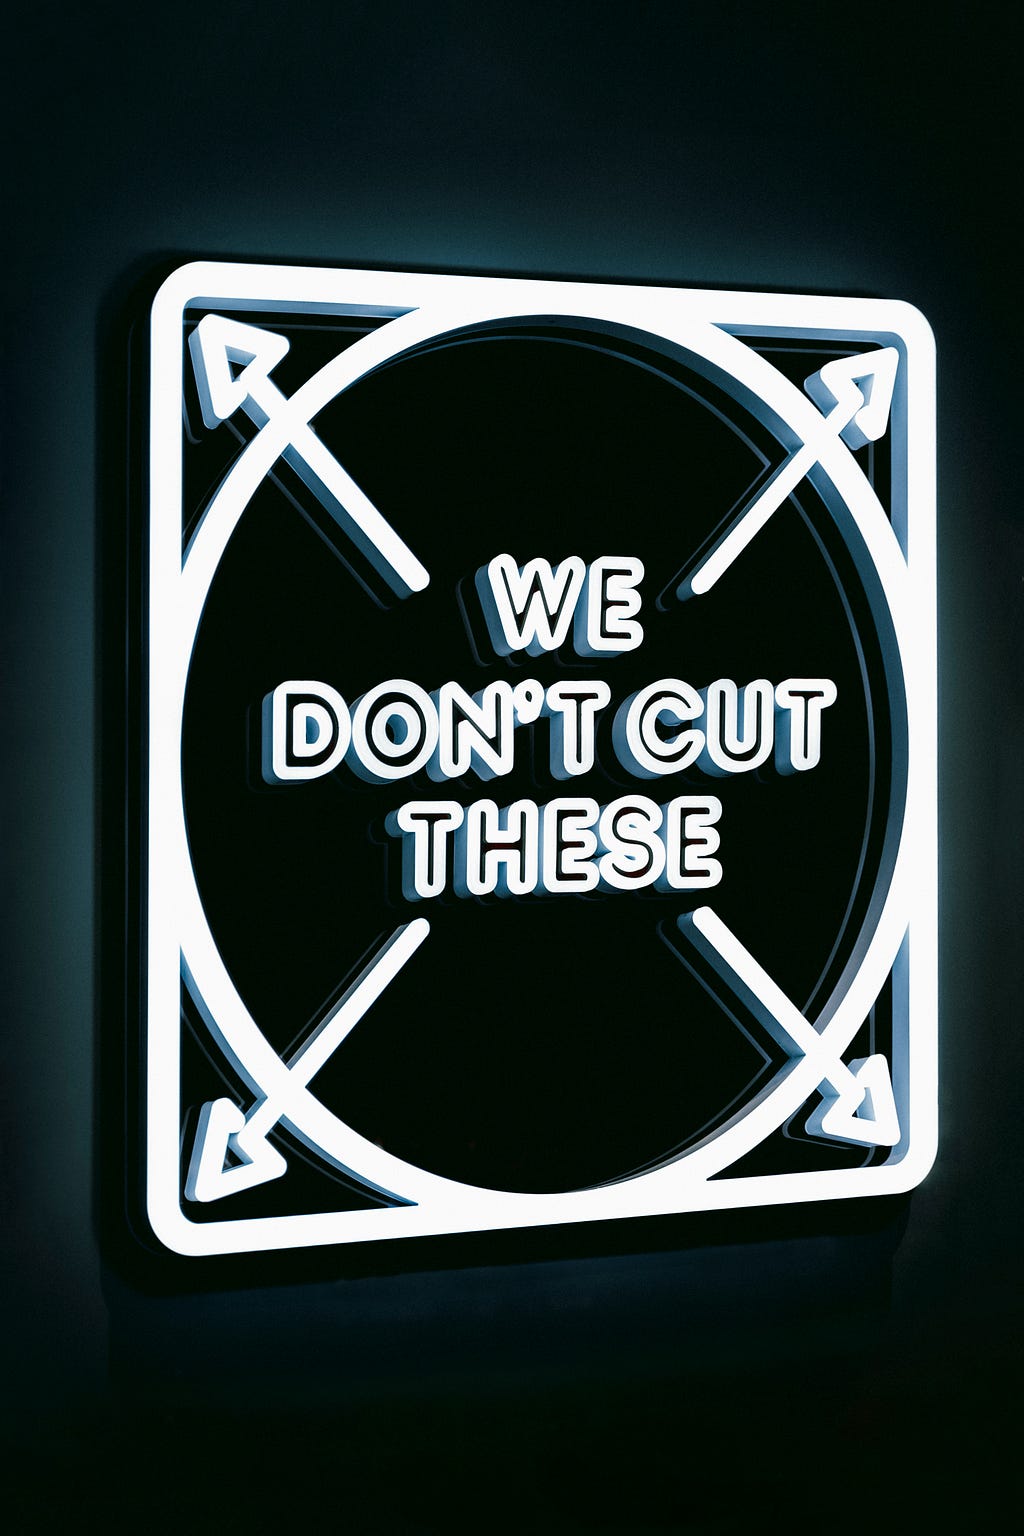 Sign explaining that we don’t cut corners